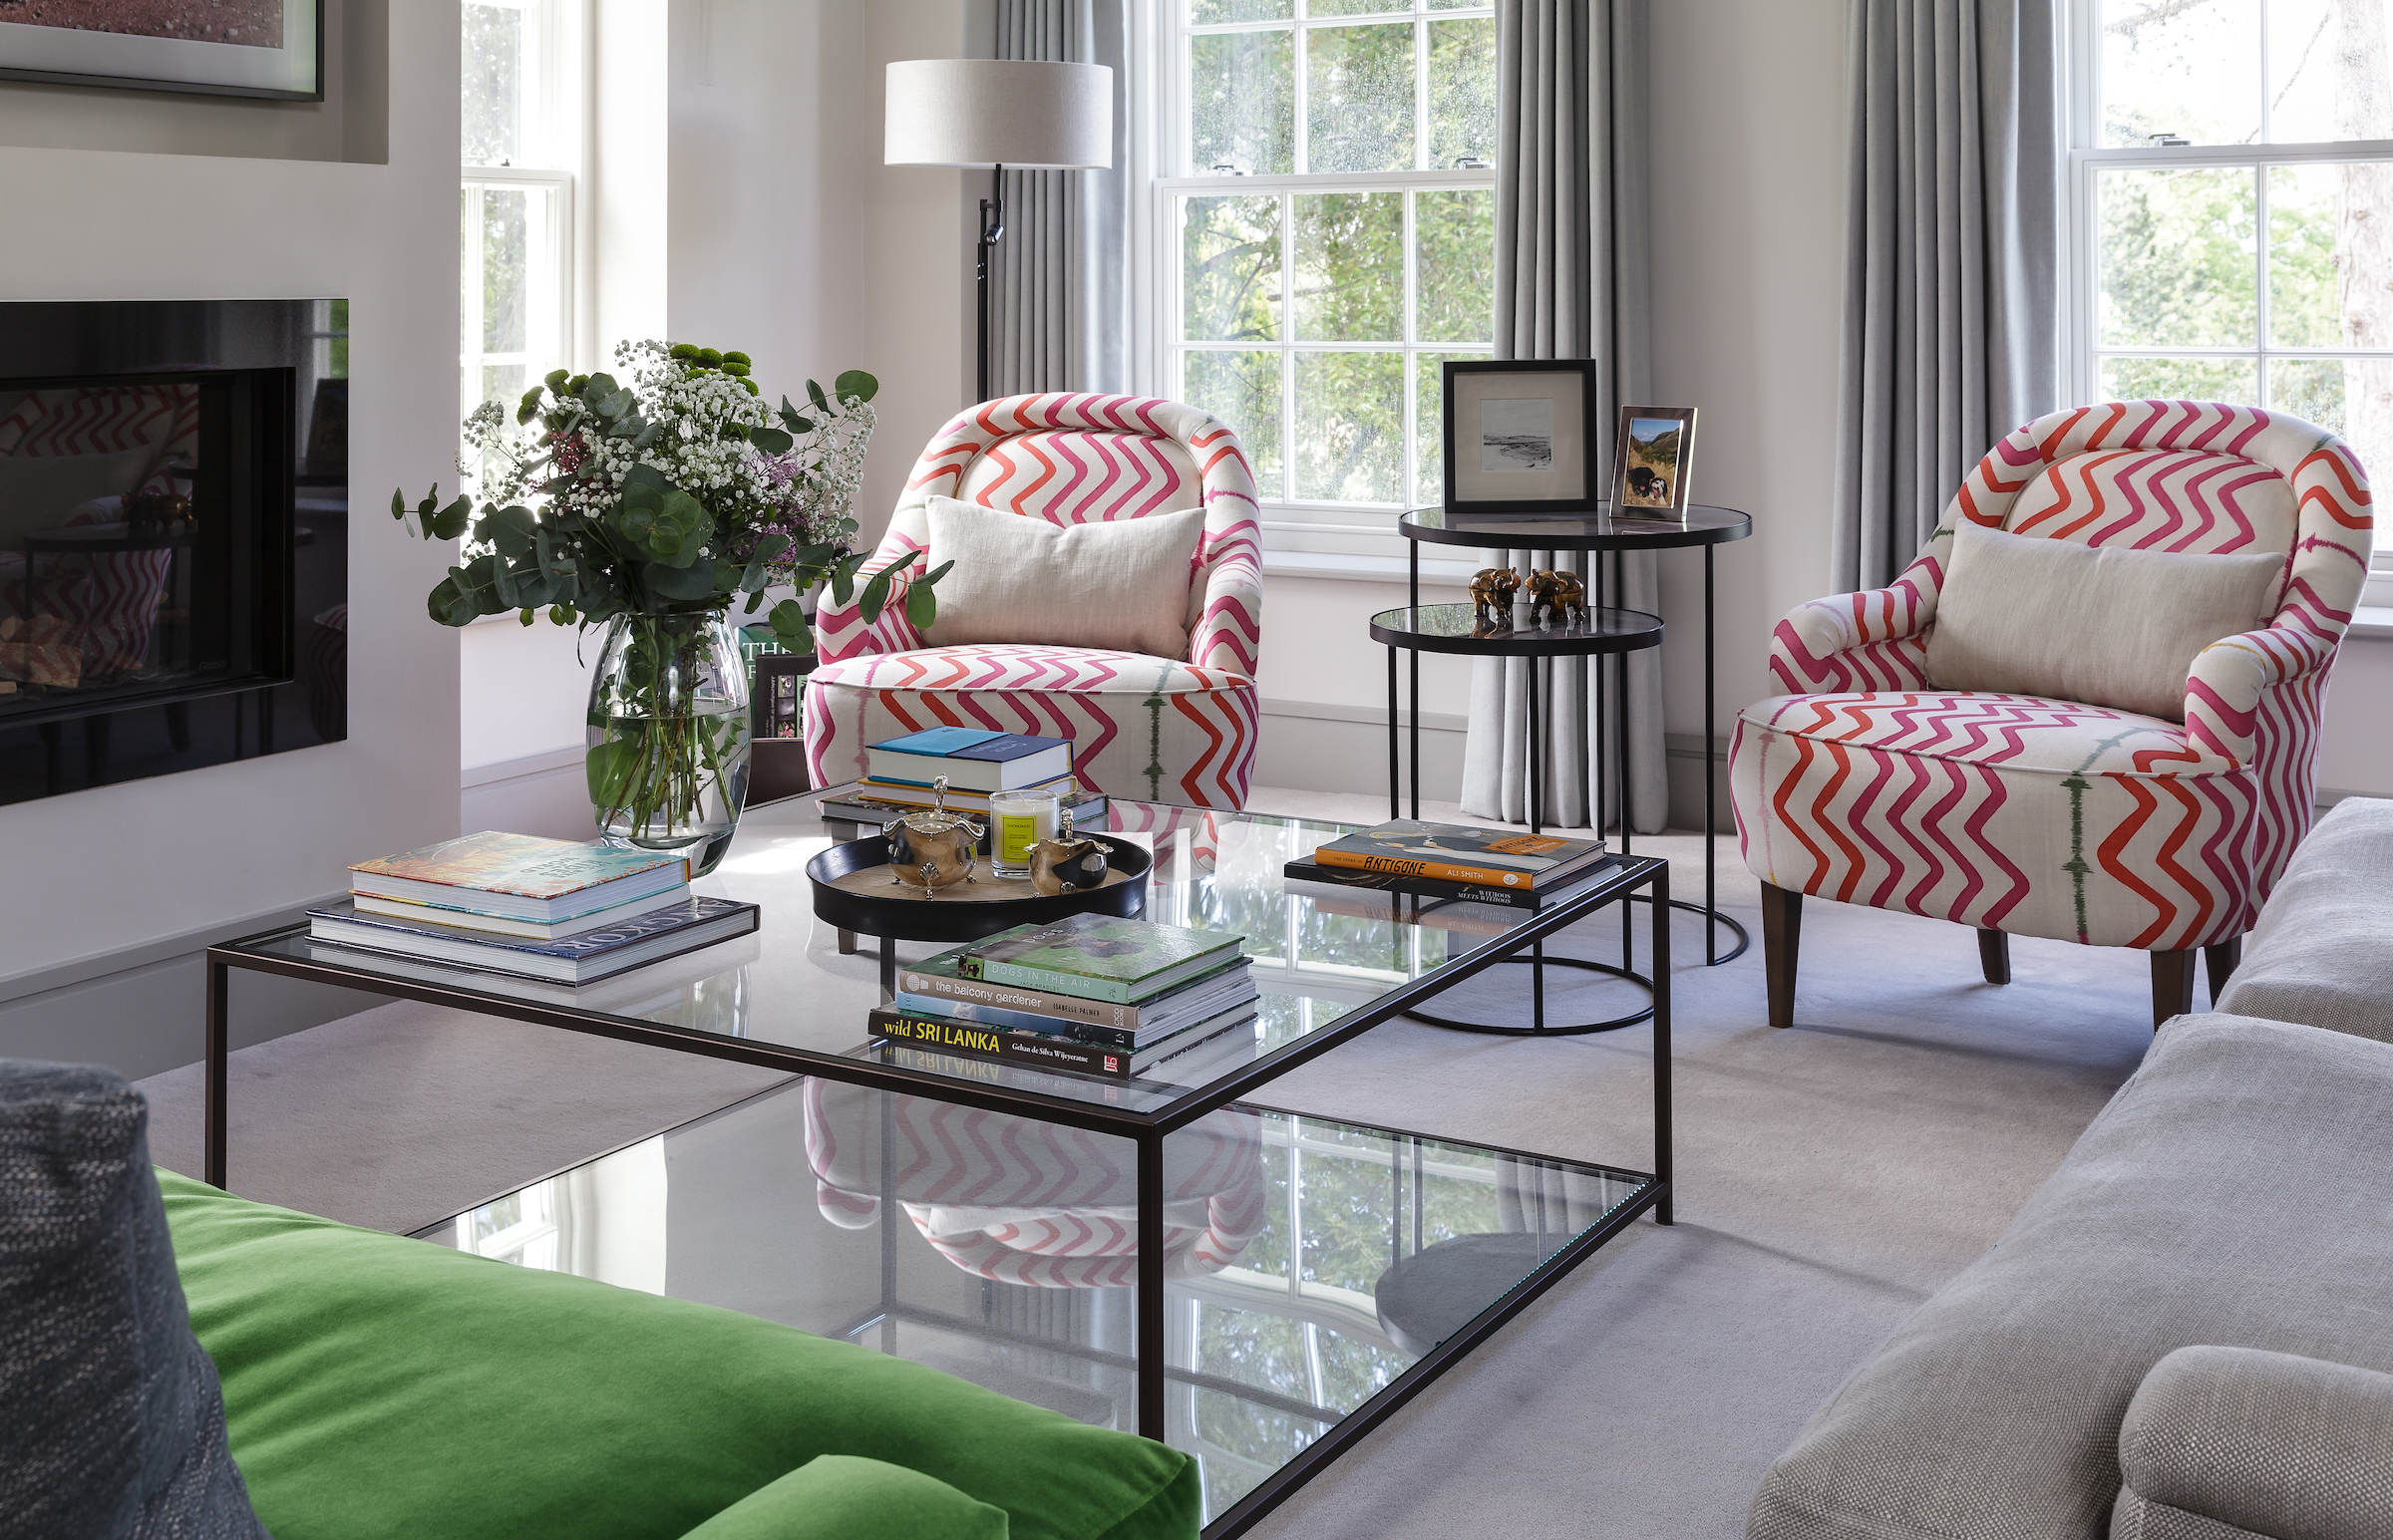 Kit Kemp Rick Rack fabric on armchairs interior Design by Hilary White